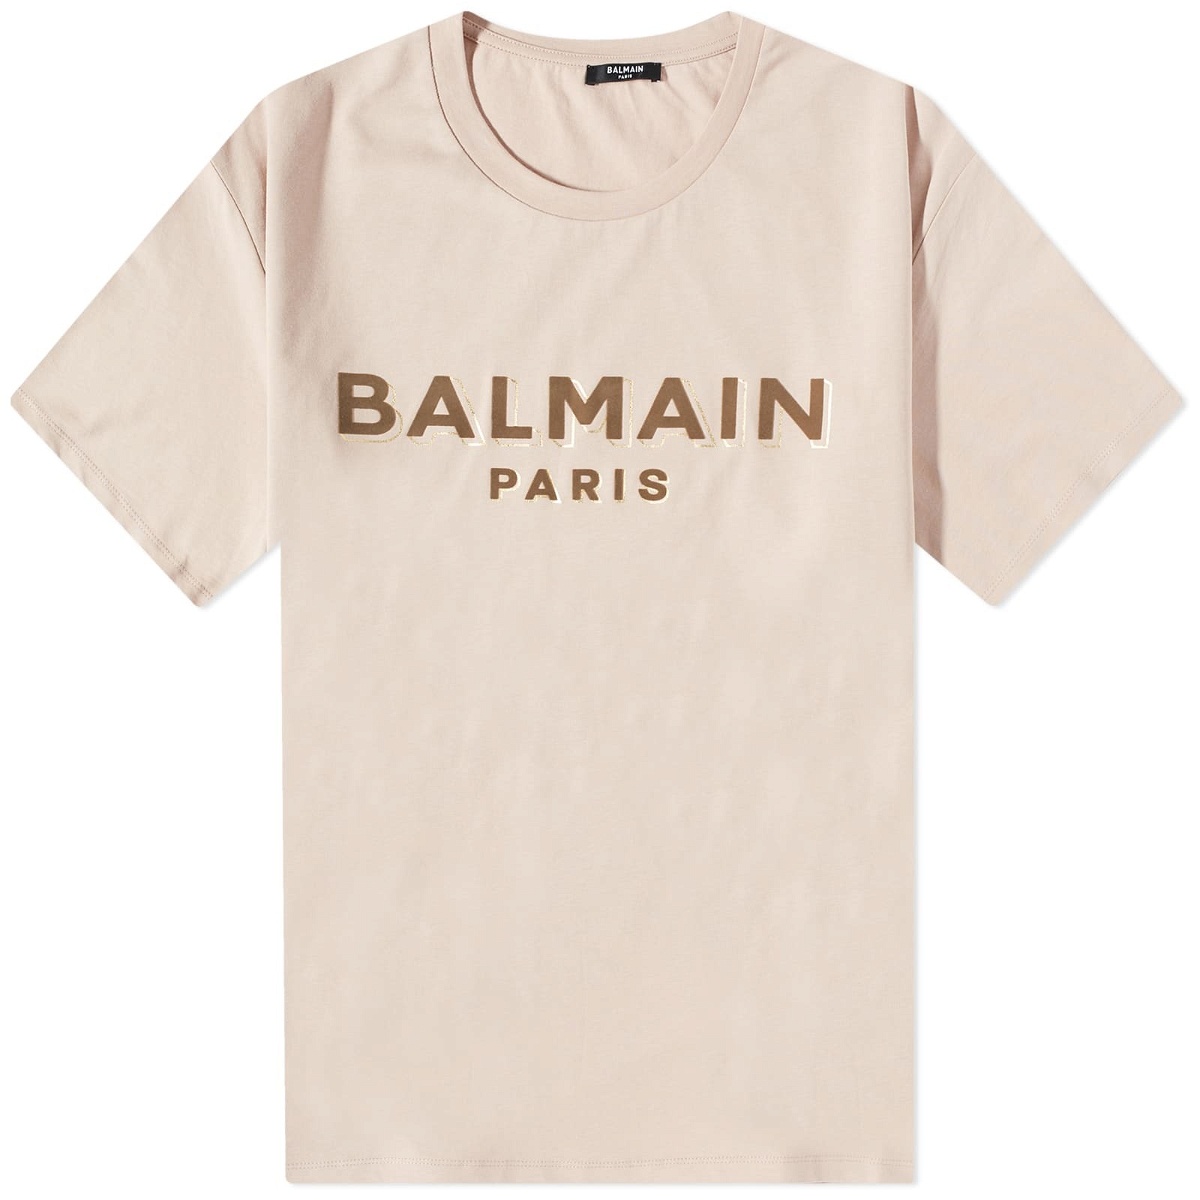 Balmain Men's Flock & Foil Paris Logo T-Shirt in Nude/Taupe Balmain